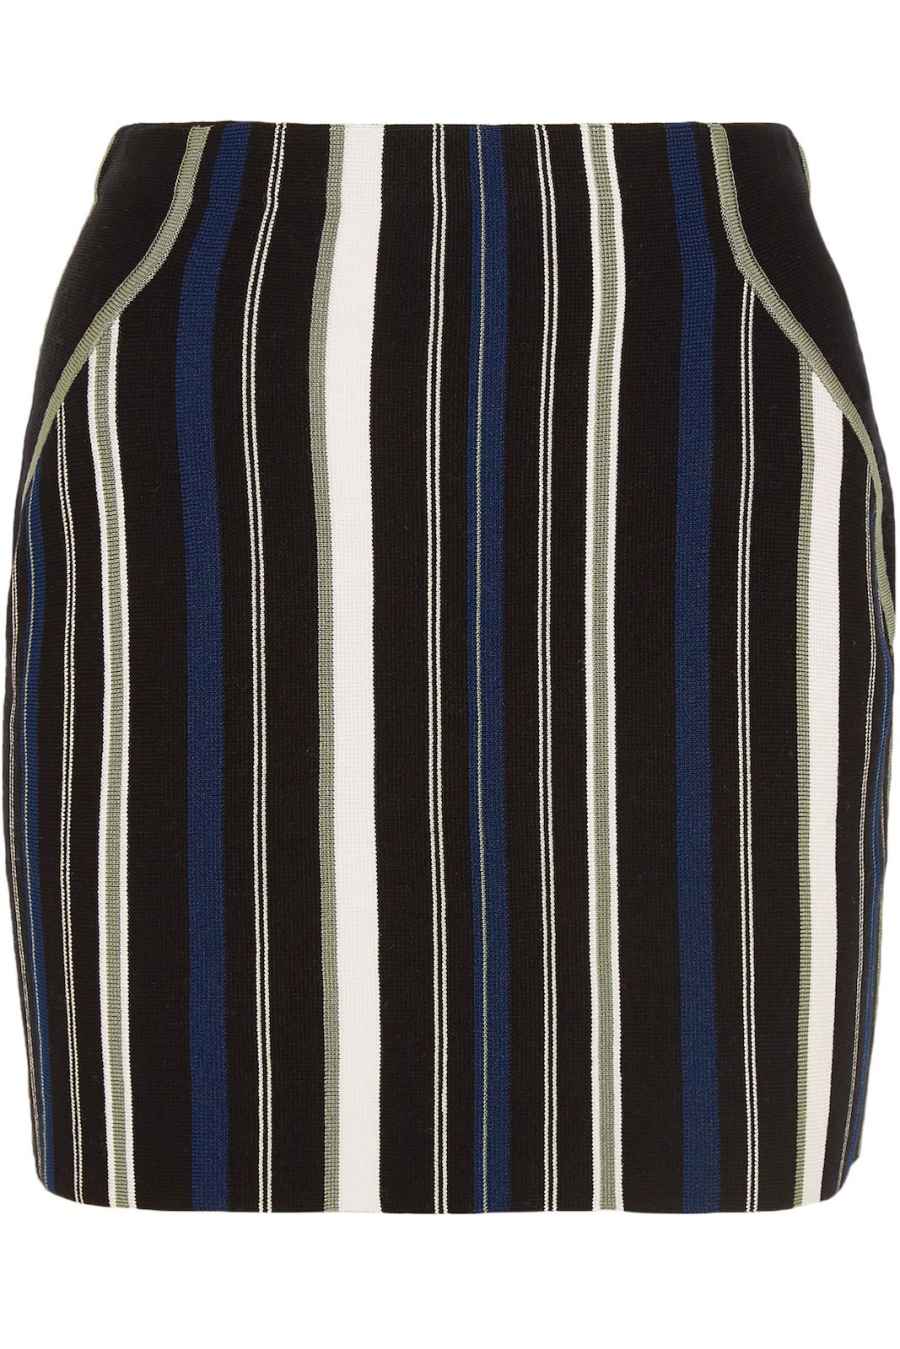 3.1 Phillip Lim Striped Stretch Cotton-Blend Mini Skirt